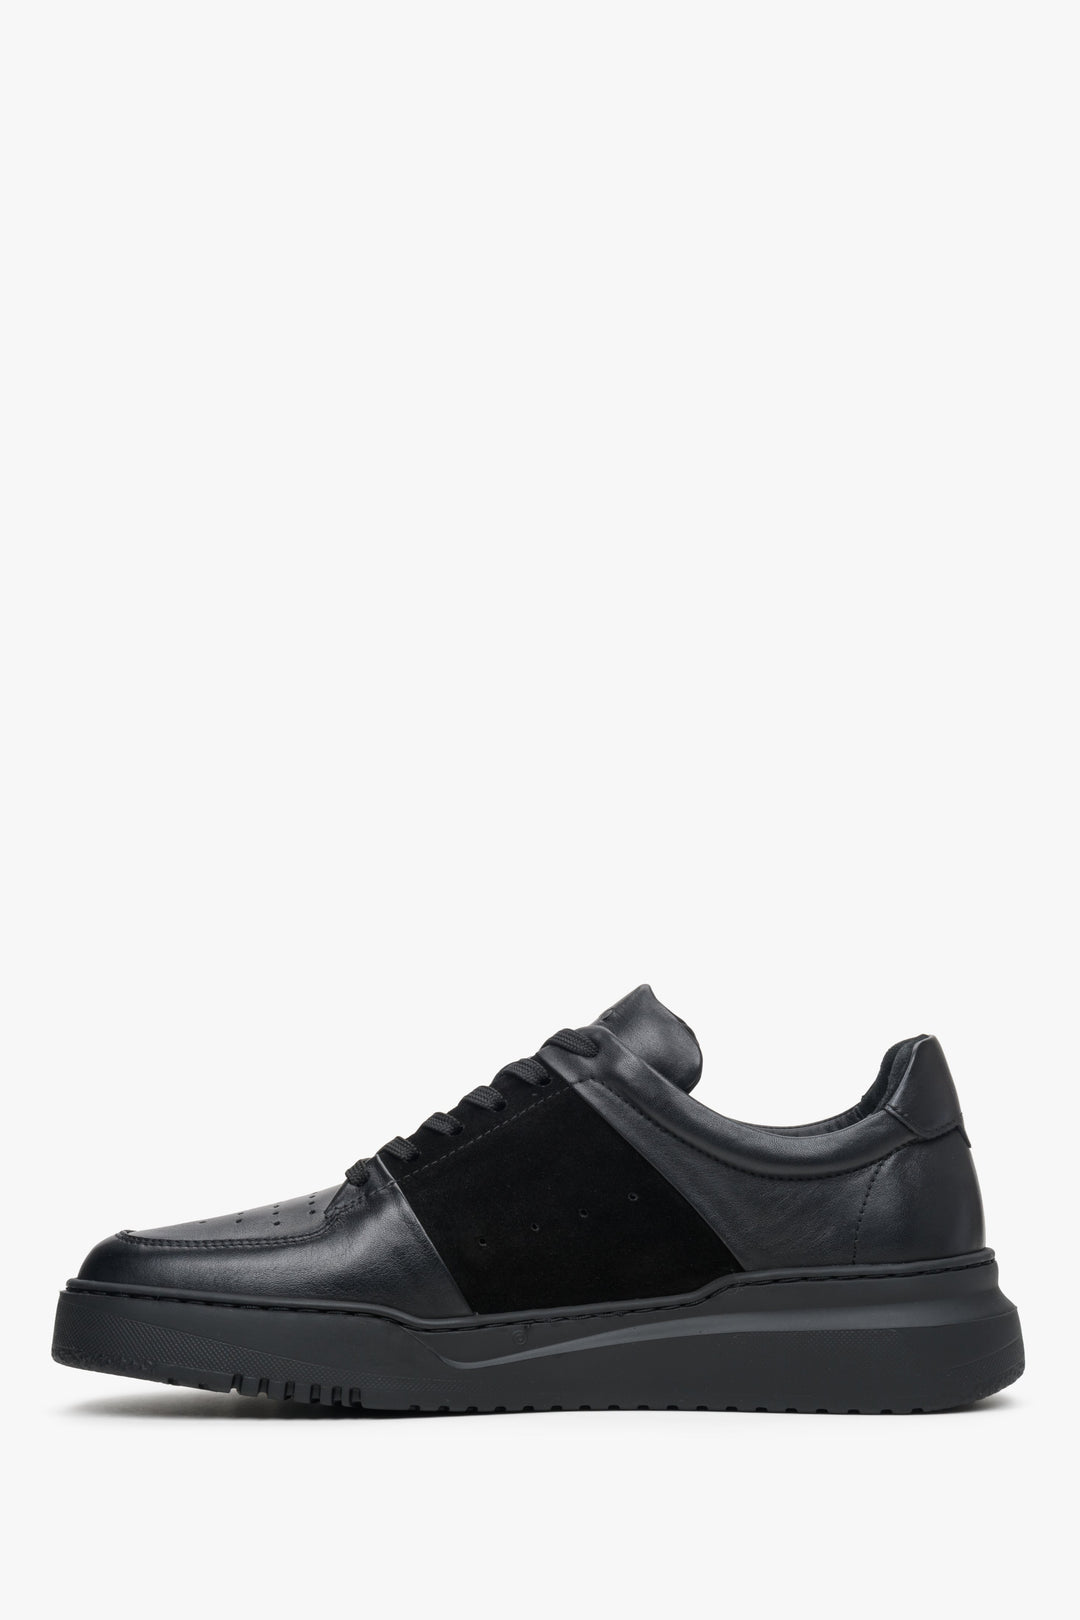 Men's black leather low top sneakers by Estro - shoe profile.